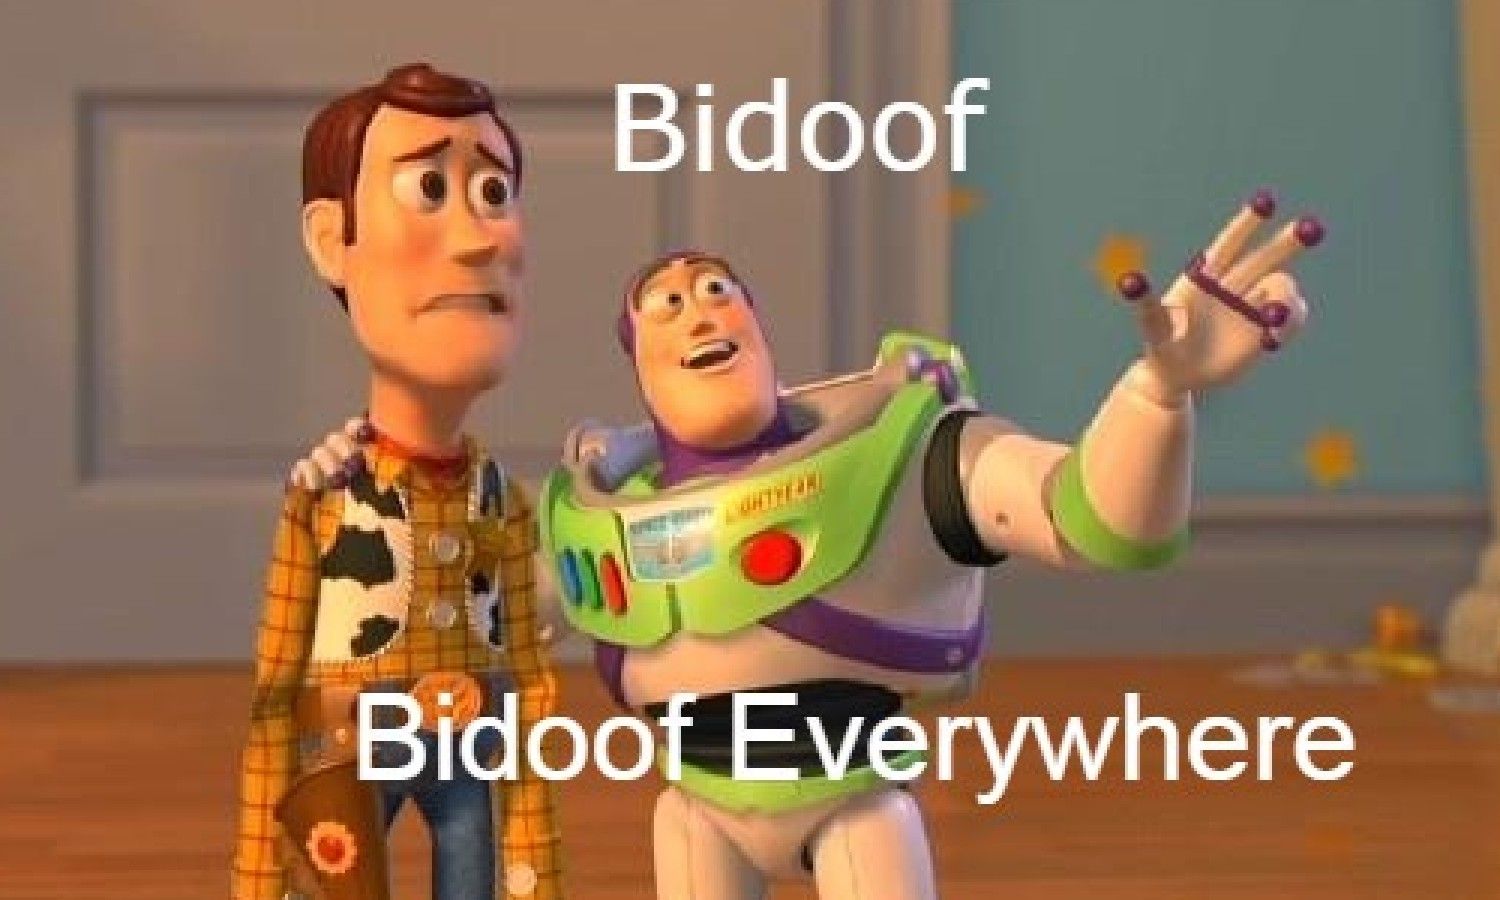 Toy Story "Bidoof Everywhere" meme.